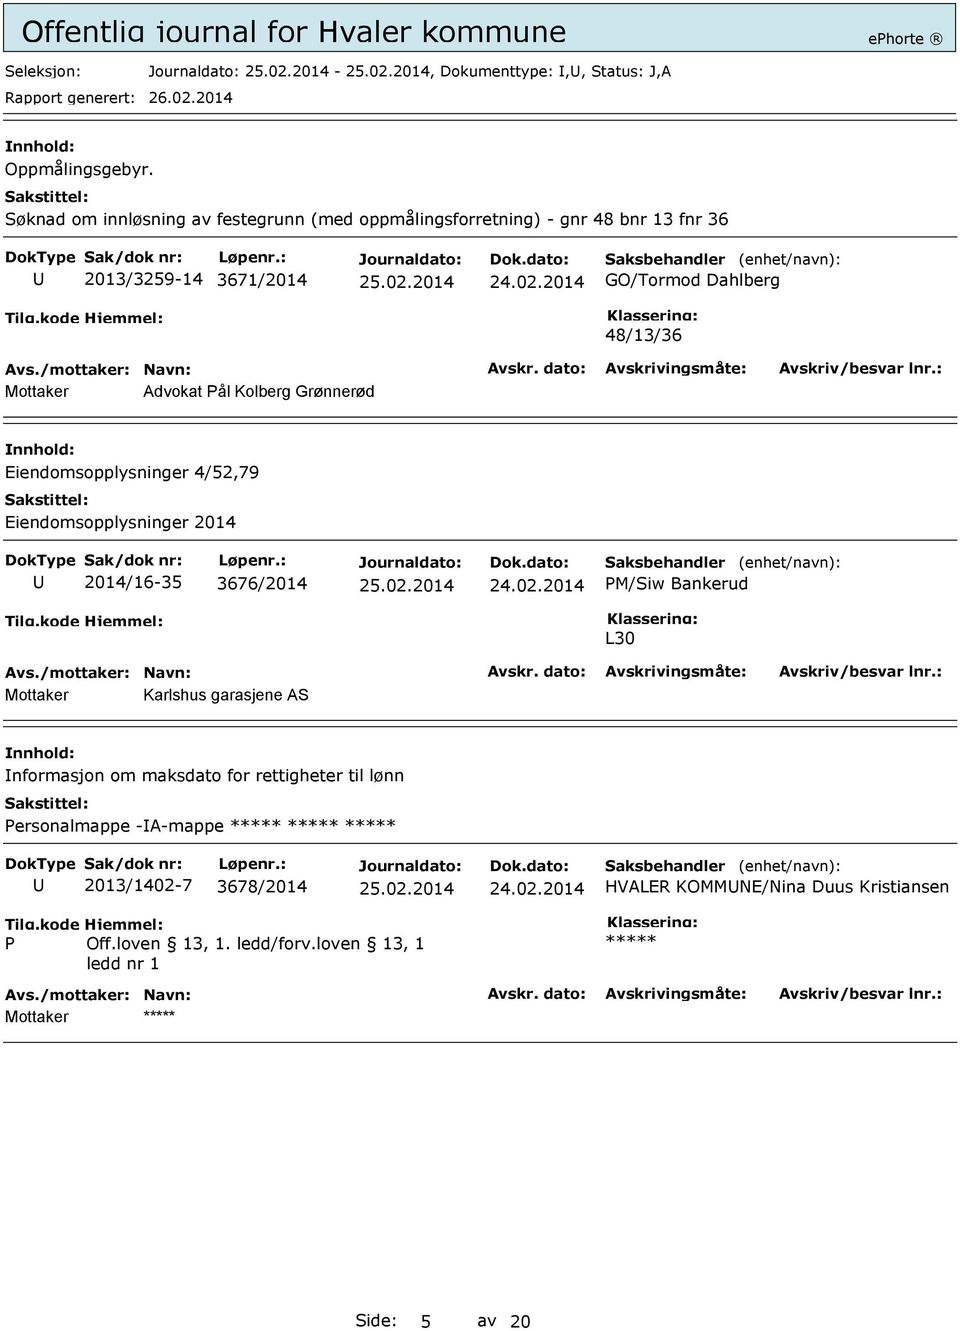 Mottaker Advokat Pål Kolberg Grønnerød Eiendomsopplysninger 4/52,79 Eiendomsopplysninger 2014 2014/16-35 3676/2014 PM/Siw Bankerud L30